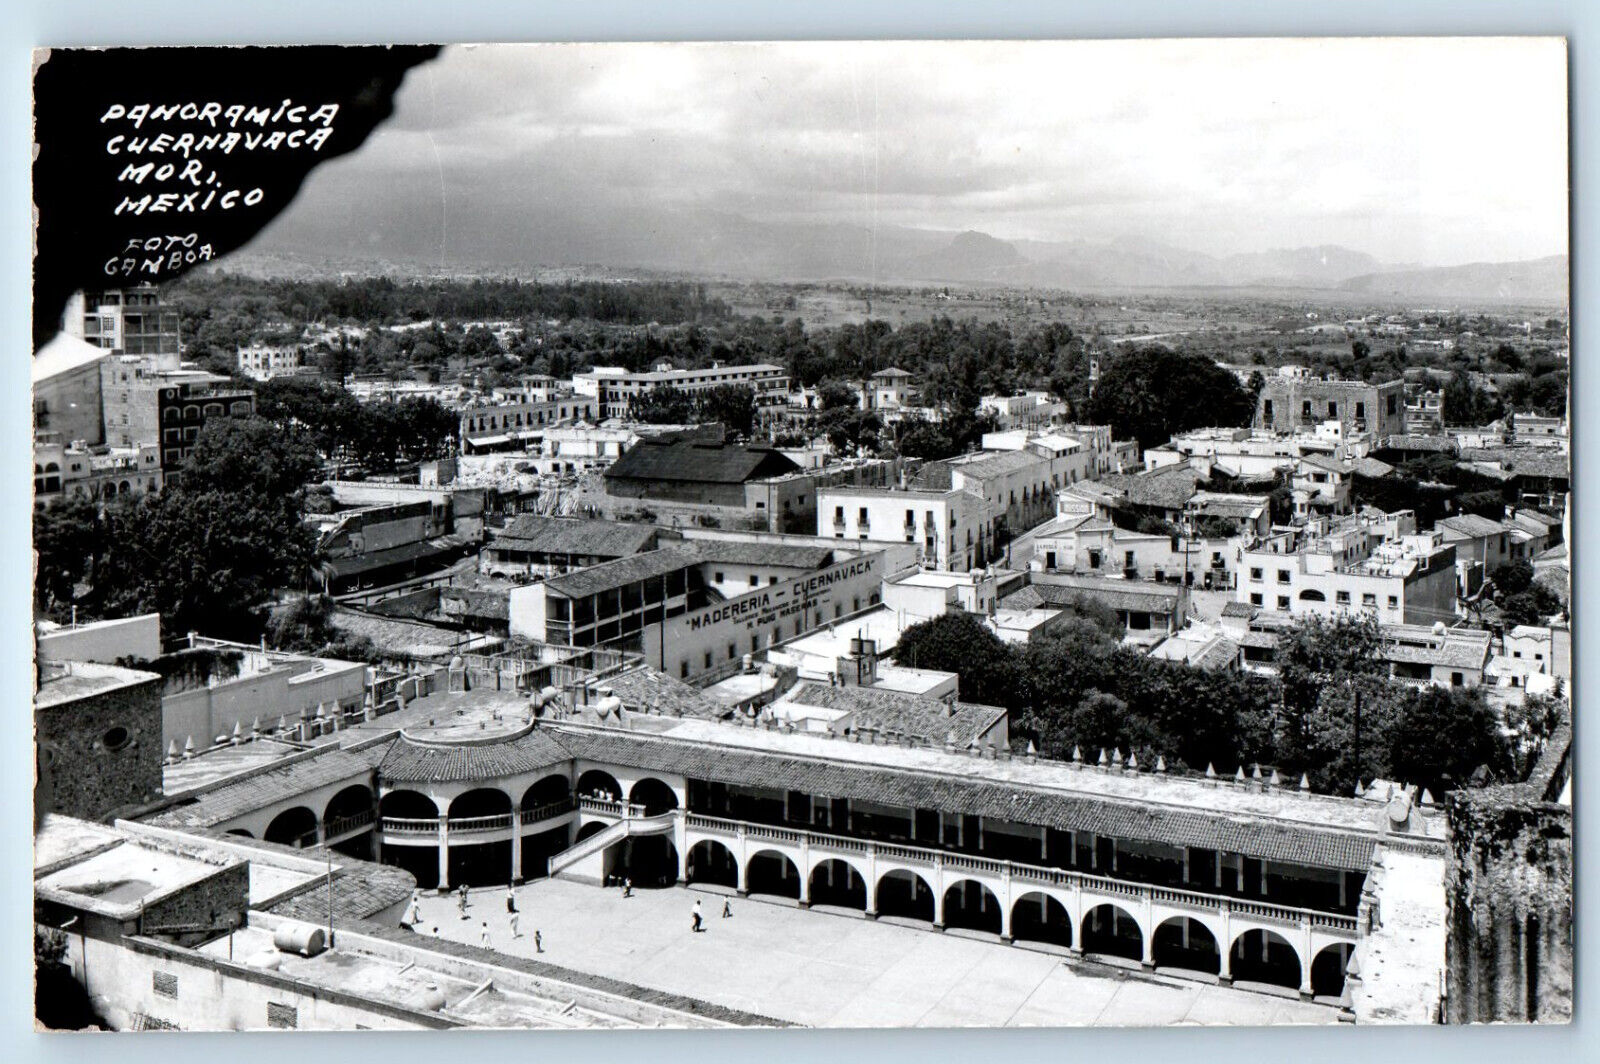 Cuernavaca Morelos Mexico Postcard Panoramic View c1950's RPPC Photo